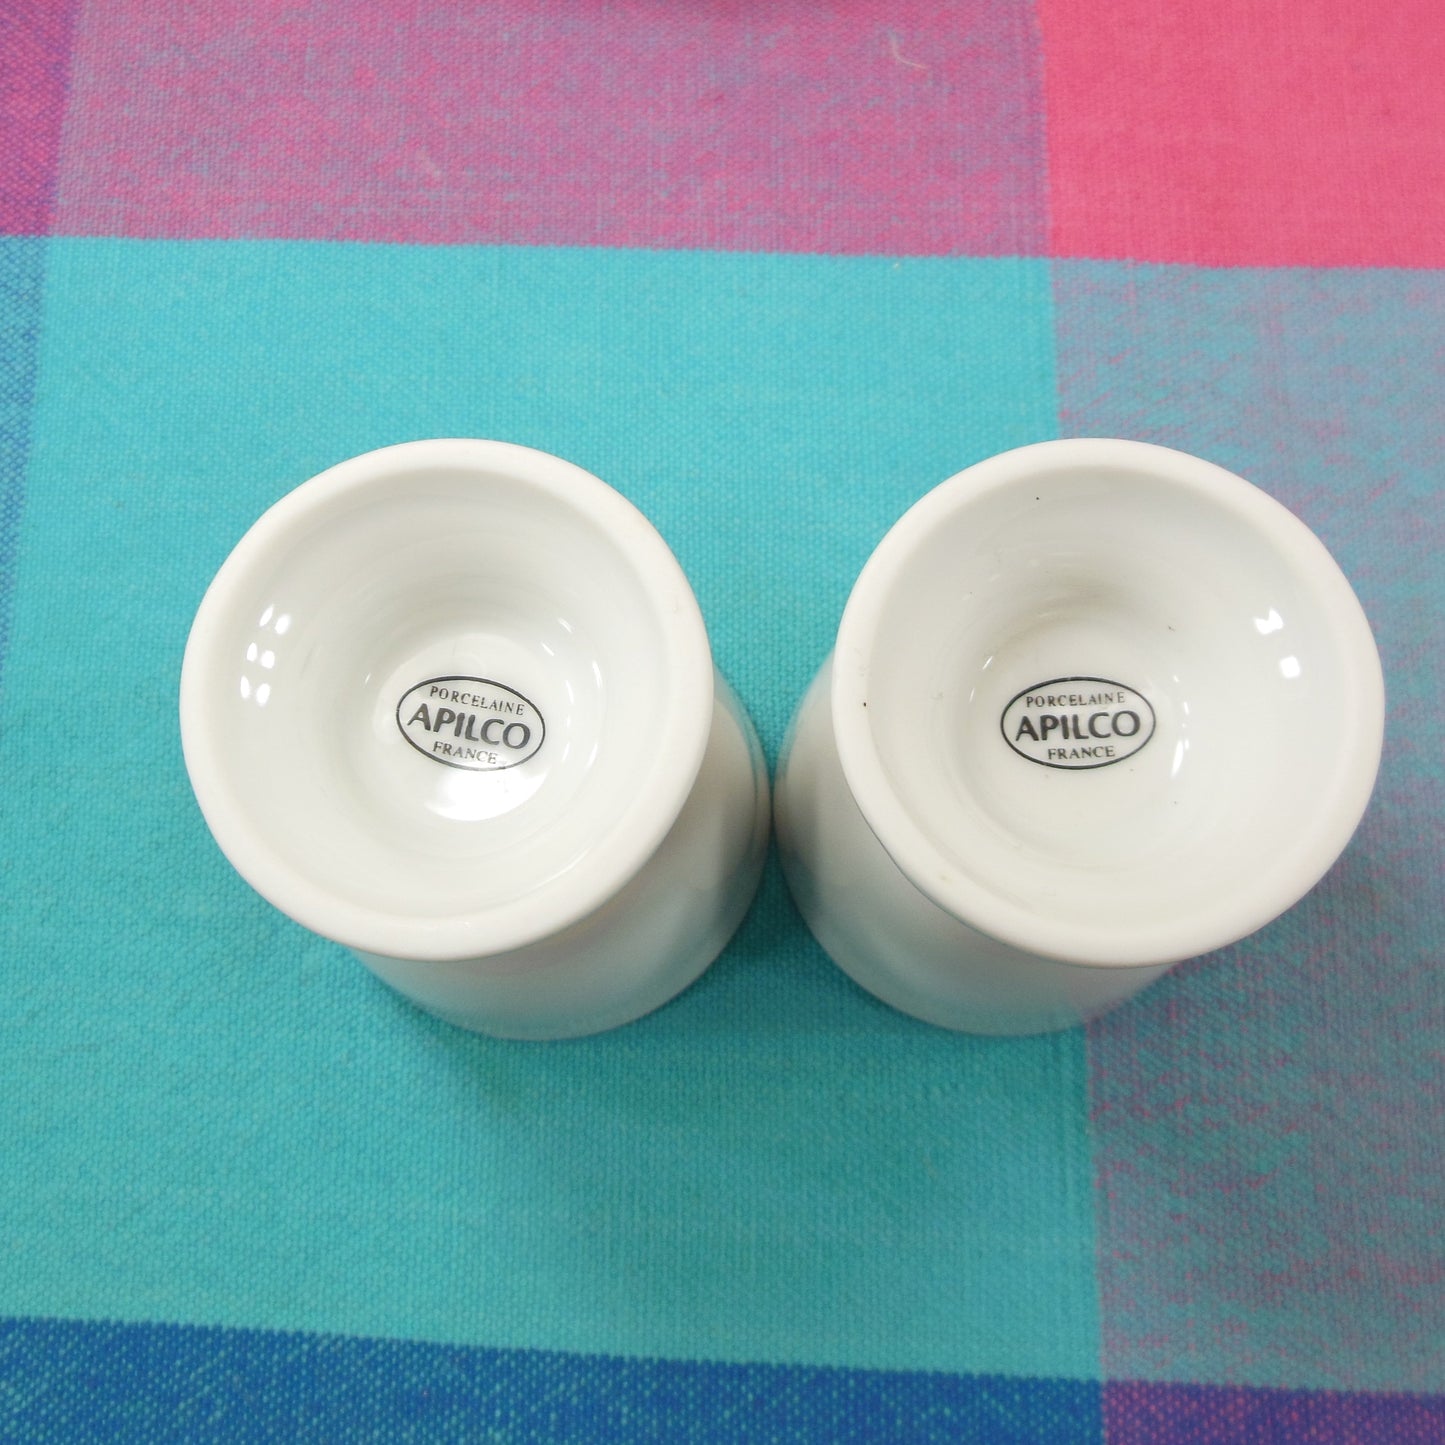 Apilco France White Porcelain Egg Cup Pair used